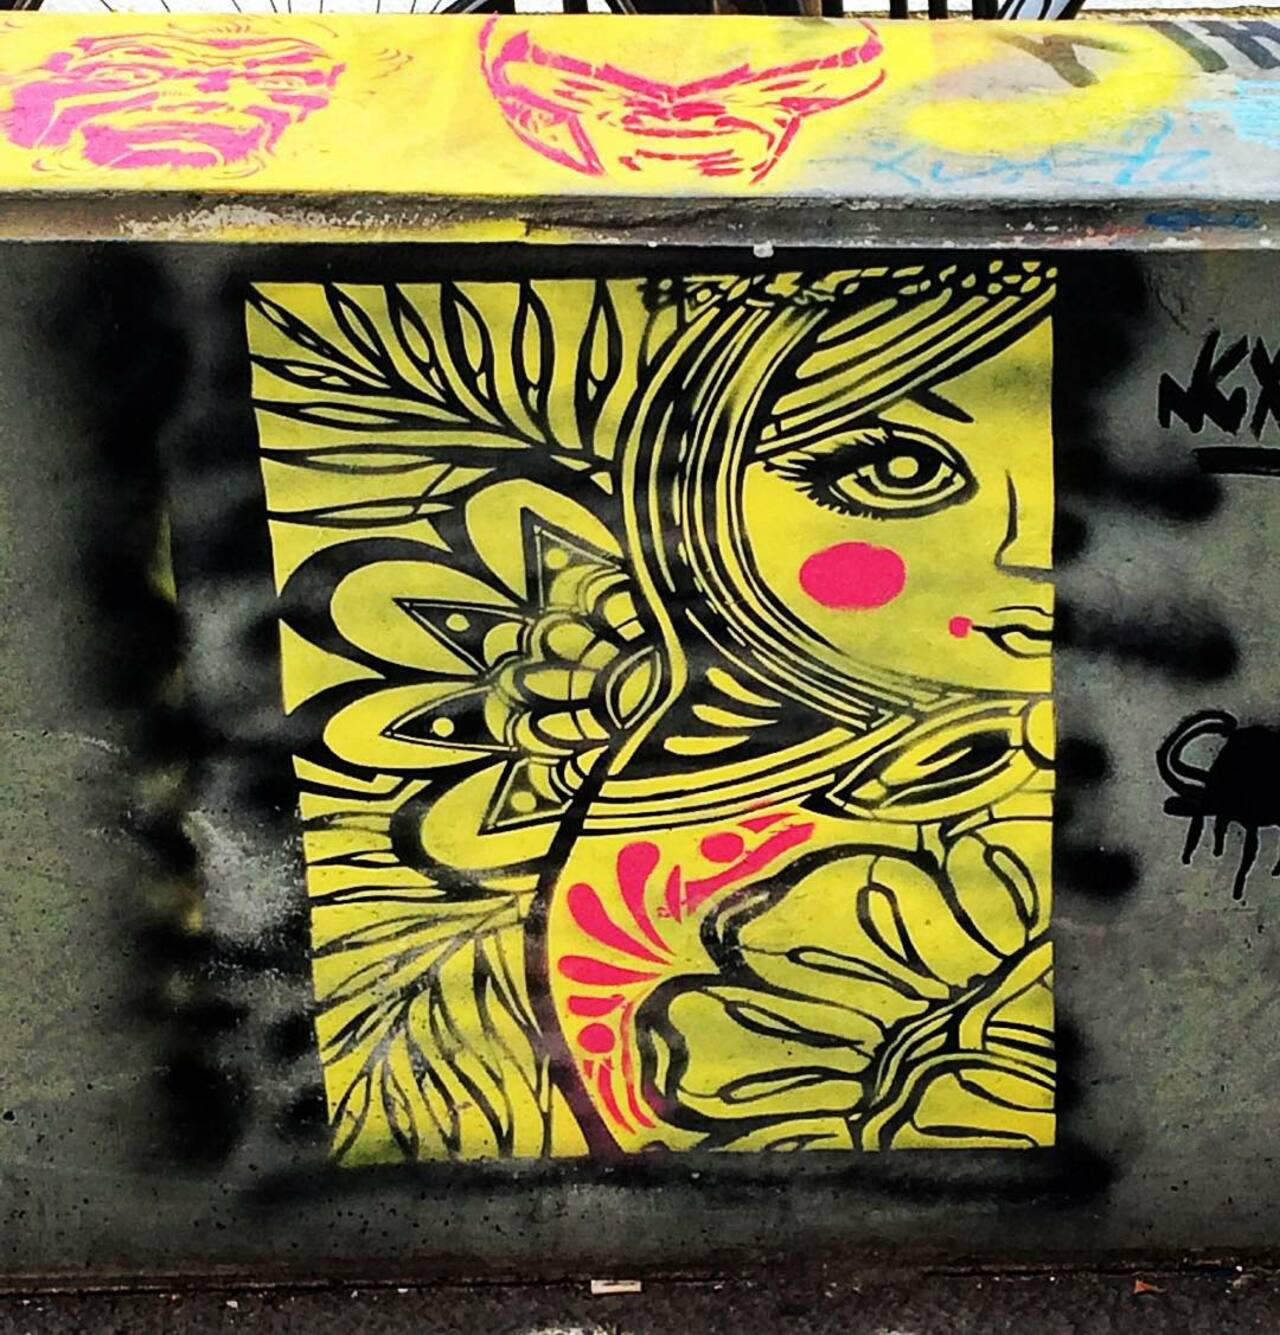 #Paris #graffiti photo by @julosteart http://ift.tt/1Pqe94I #StreetArt http://t.co/YQn2fRgw2q